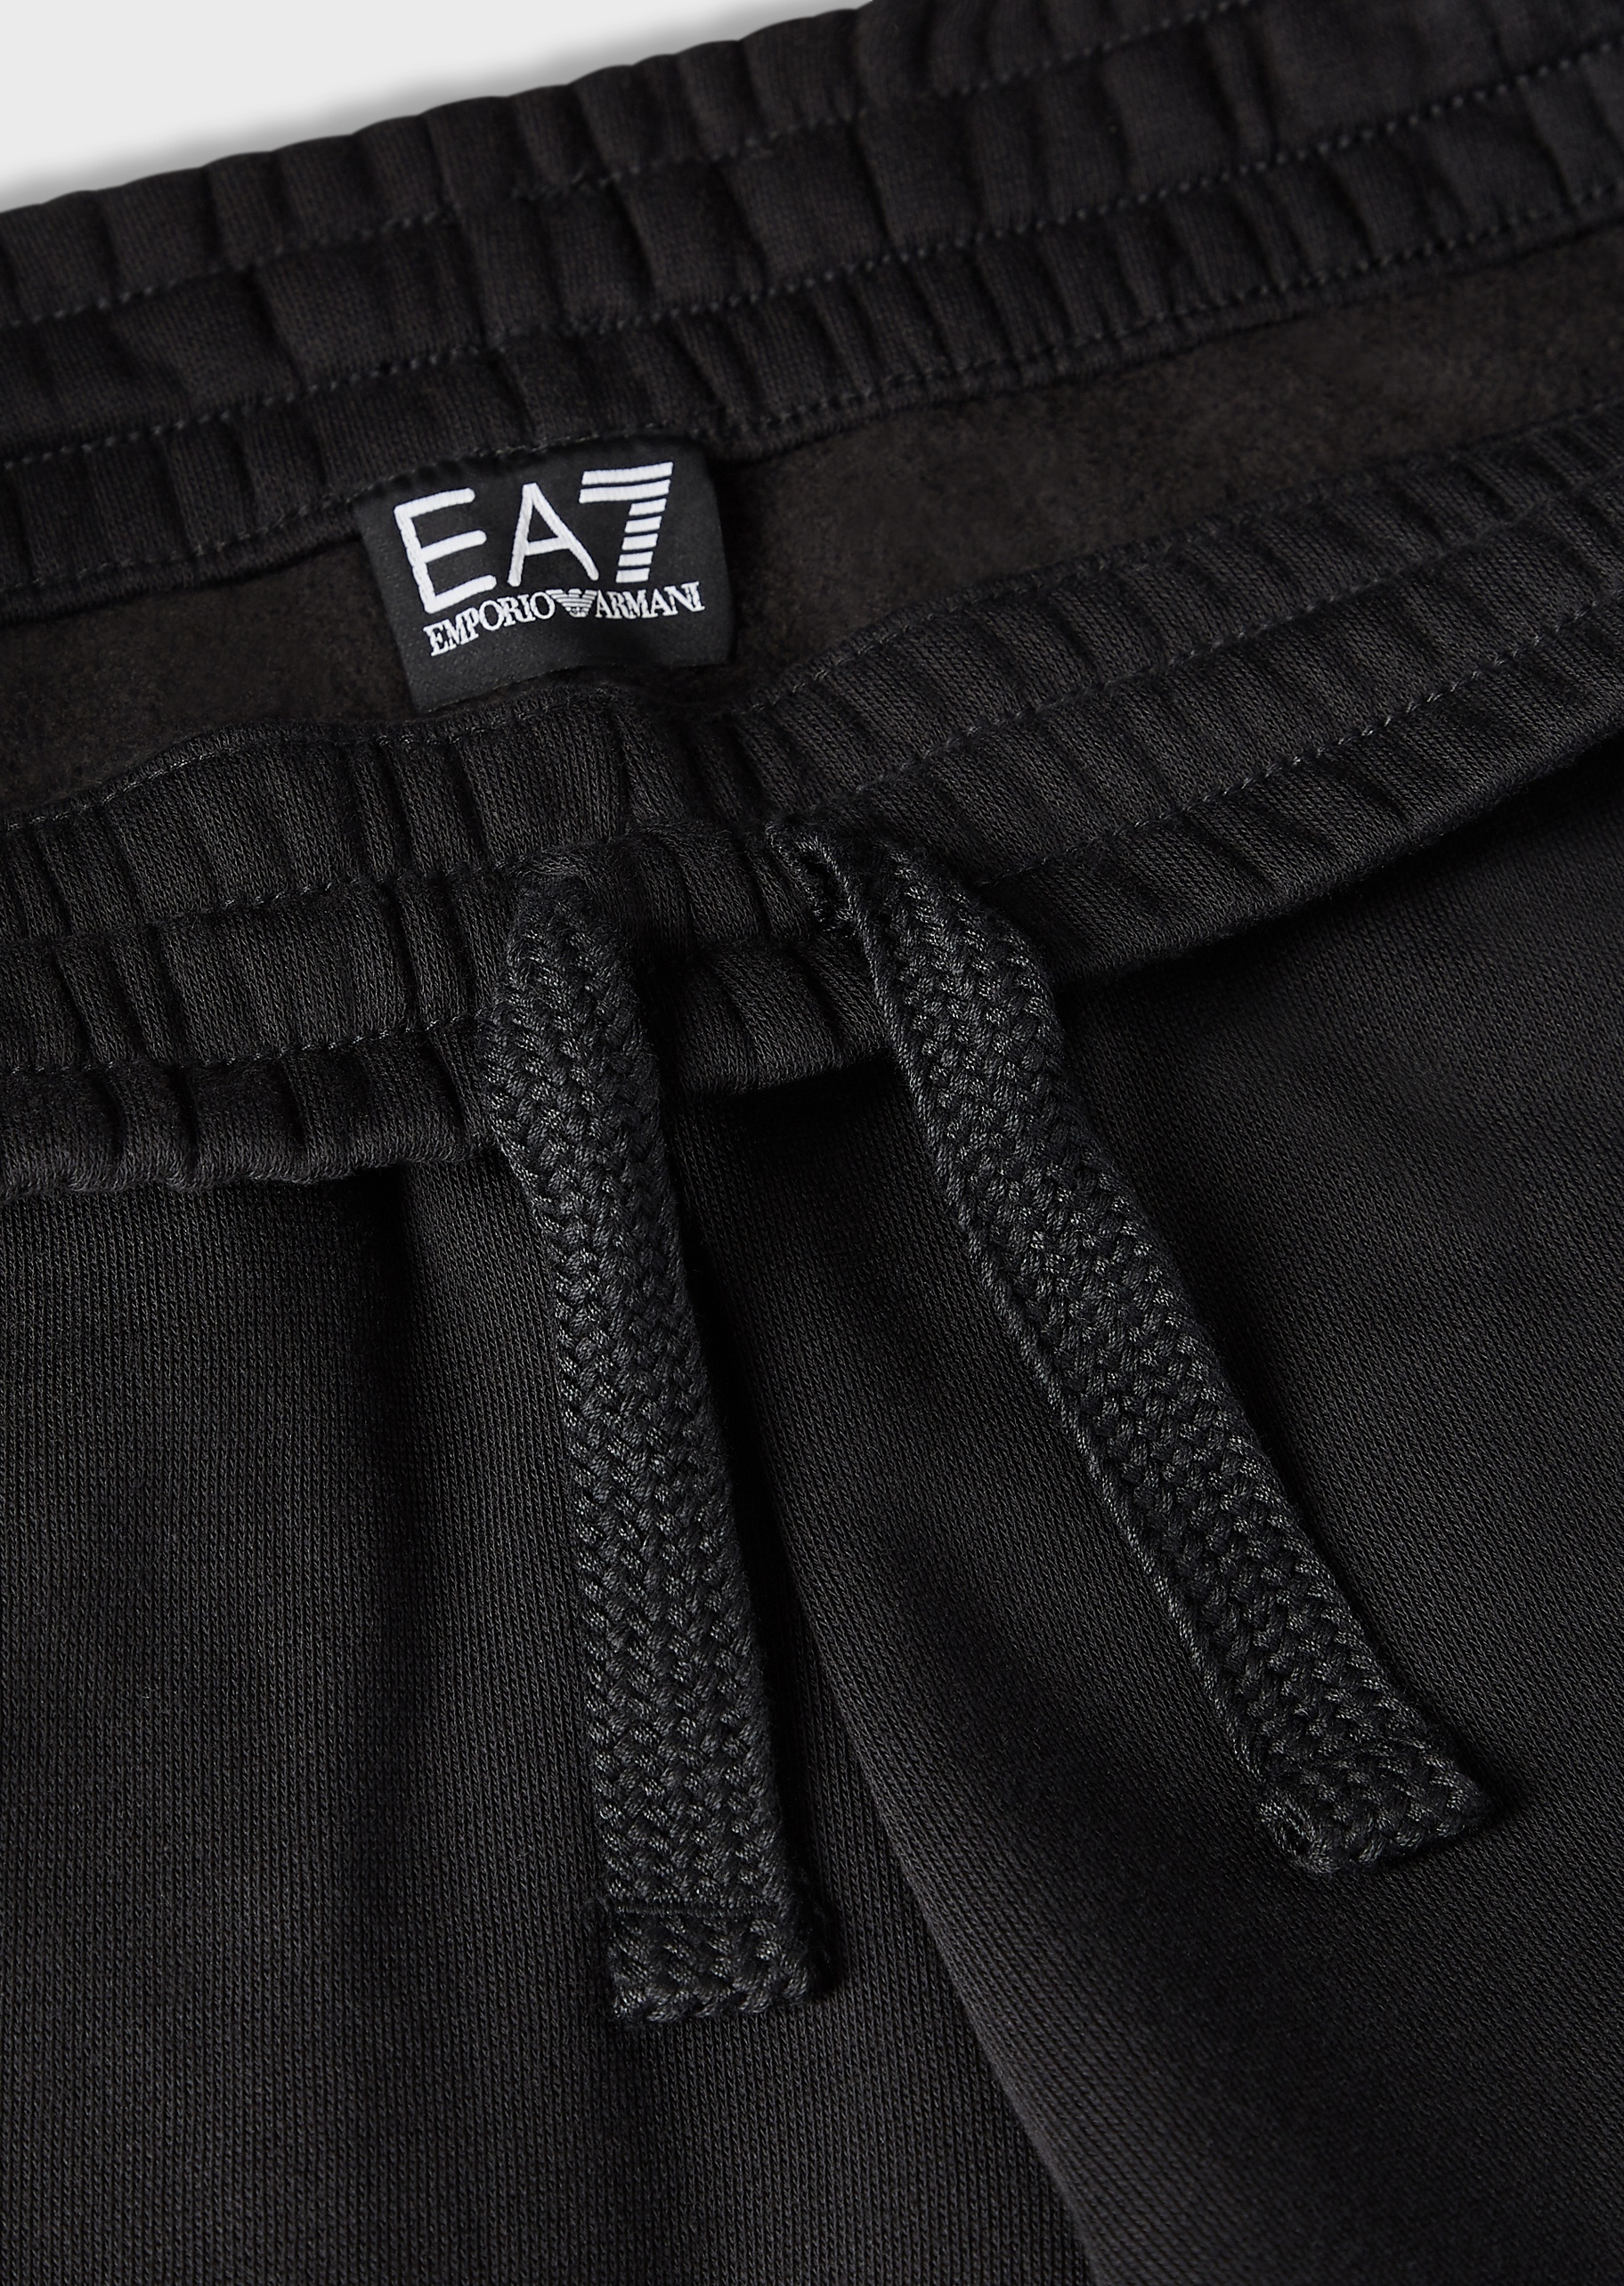 EA7 抽绳加绒慢跑卫裤